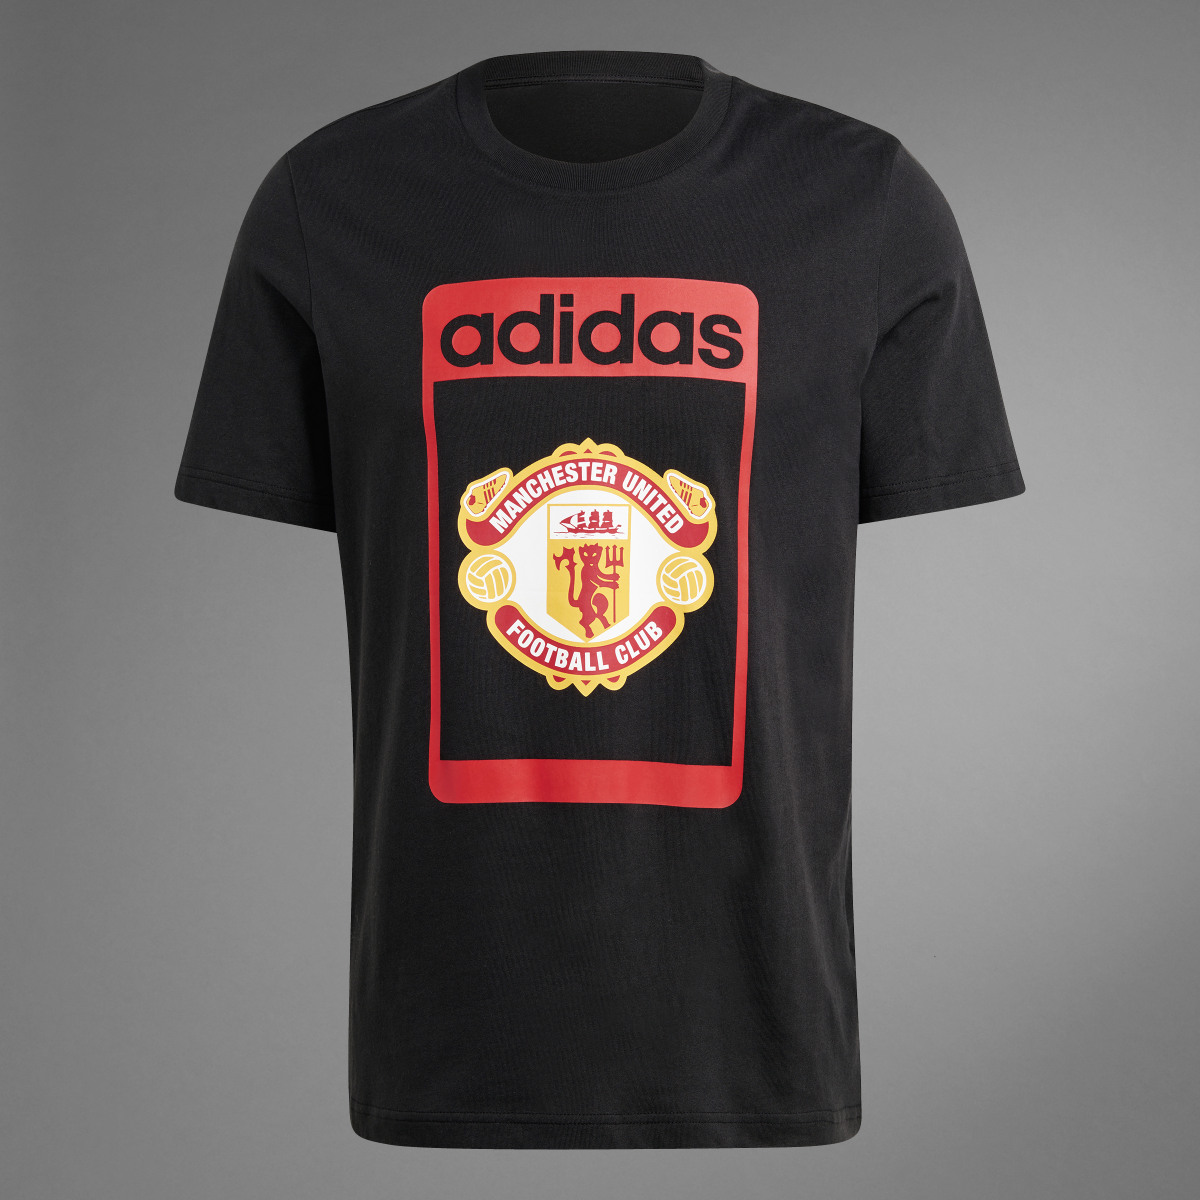 Adidas Manchester United OG Graphic T-Shirt. 10